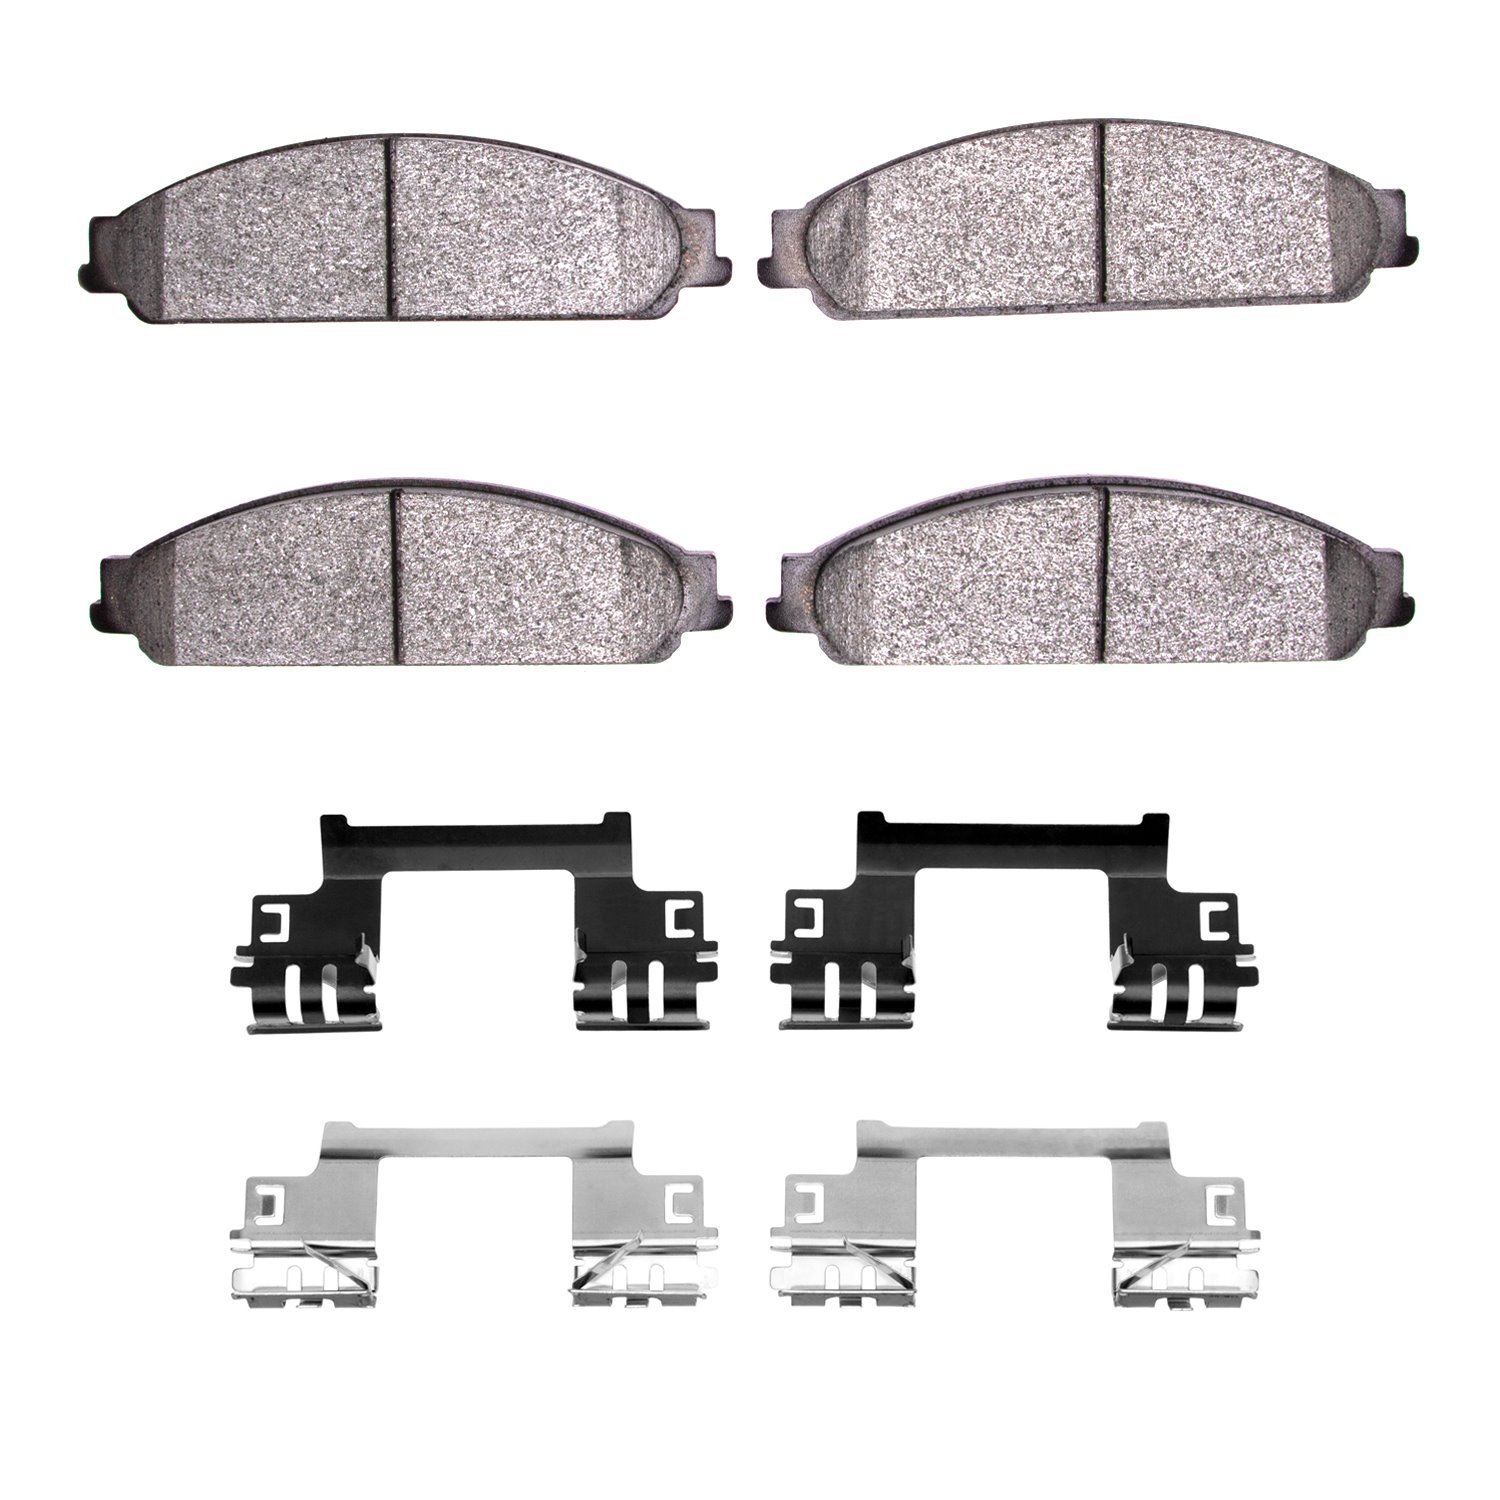 1551-1070-02 5000 Advanced Ceramic Brake Pads & Hardware Kit, 2005-2009 Ford/Lincoln/Mercury/Mazda, Position: Front